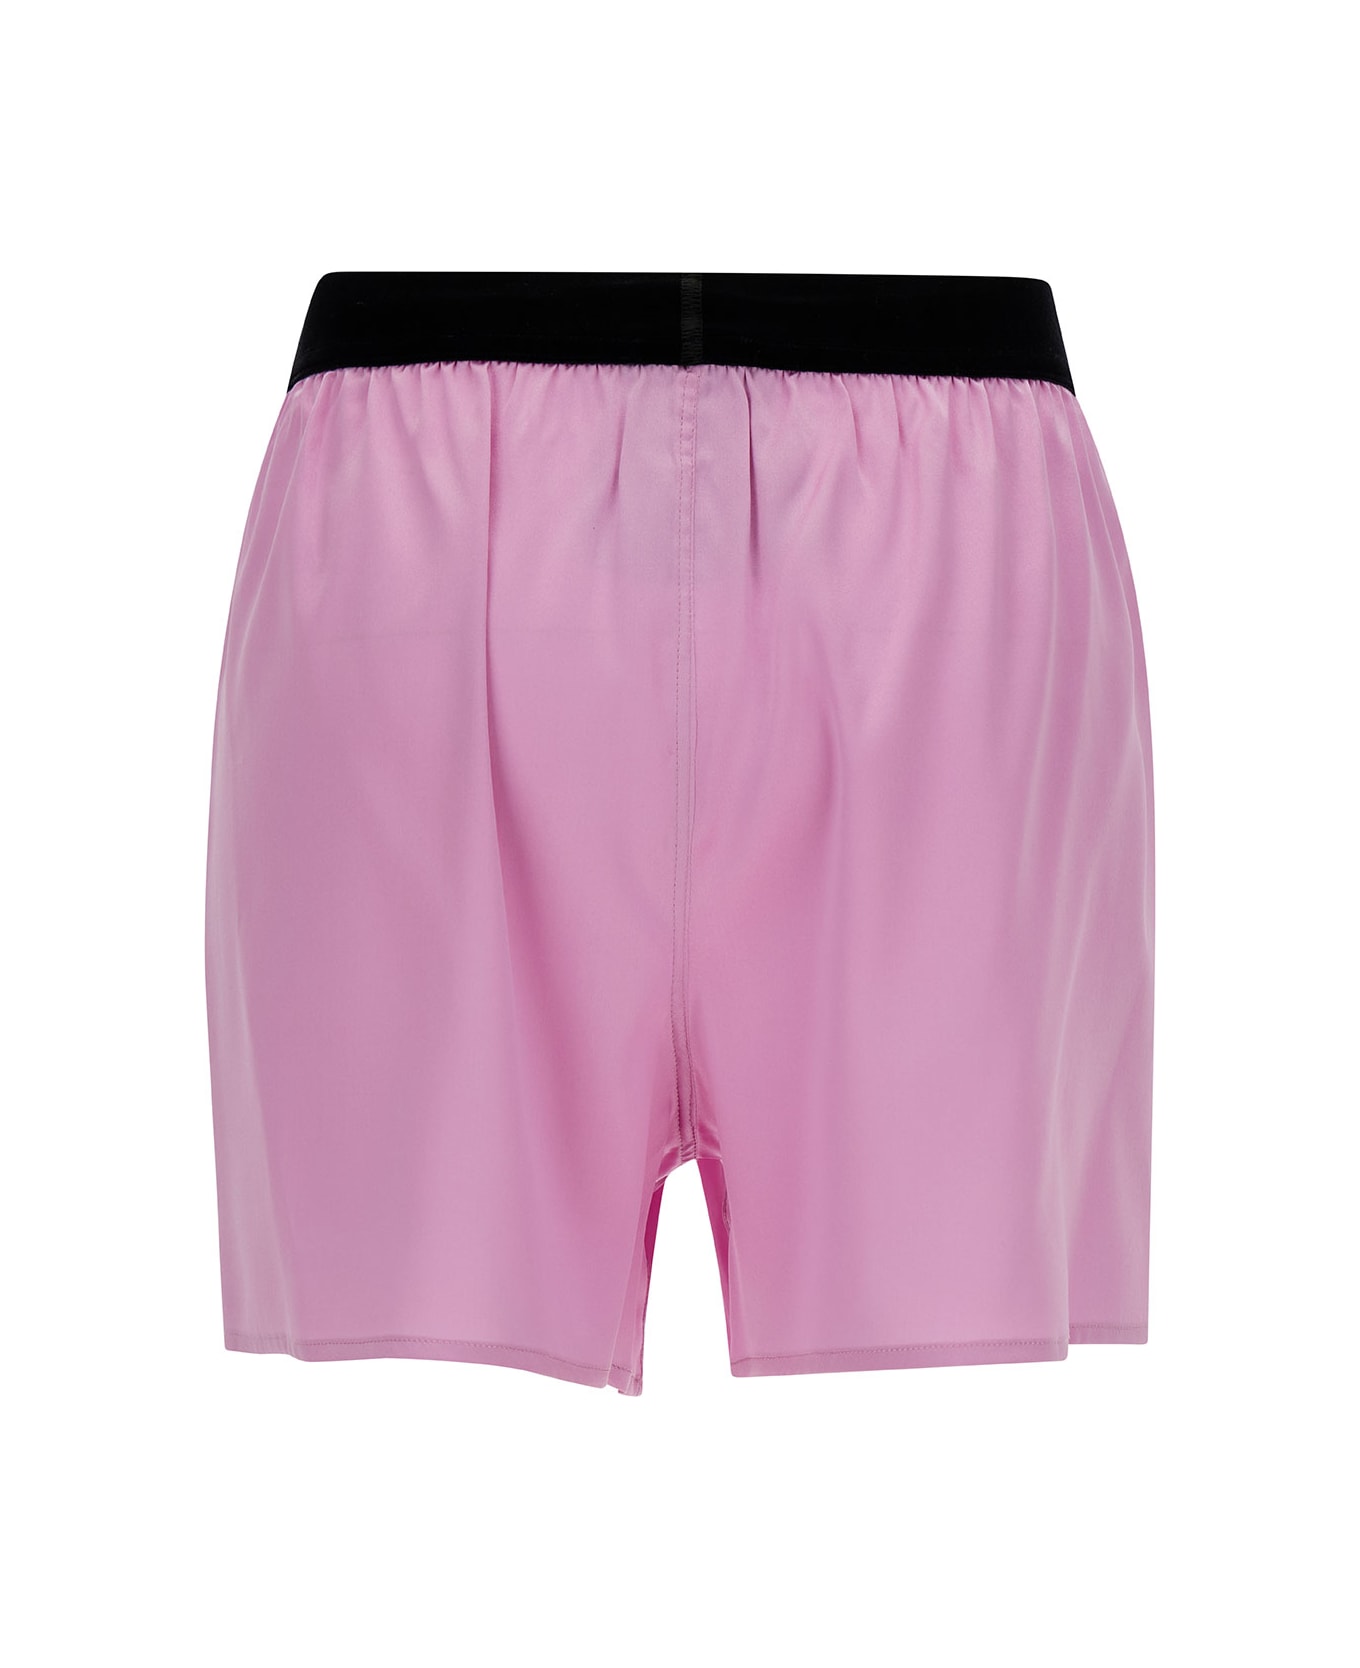 Tom Ford Stretch Silk Satin Boxer Shorts - Pink